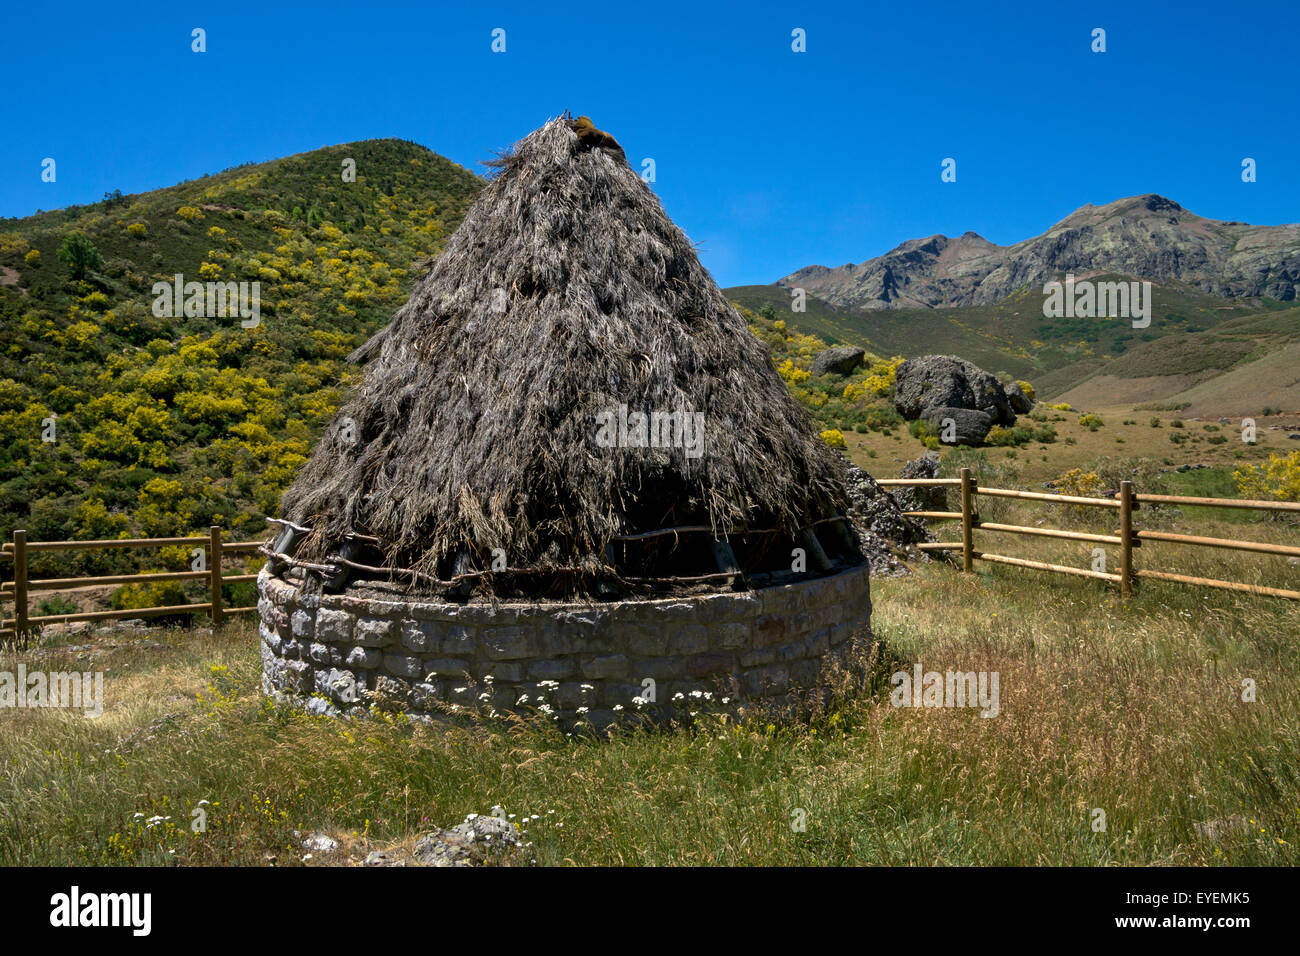 Antiguos almacenes de heno en altas montañas de fotos de Europa, Asturias, Norte de España Foto de stock